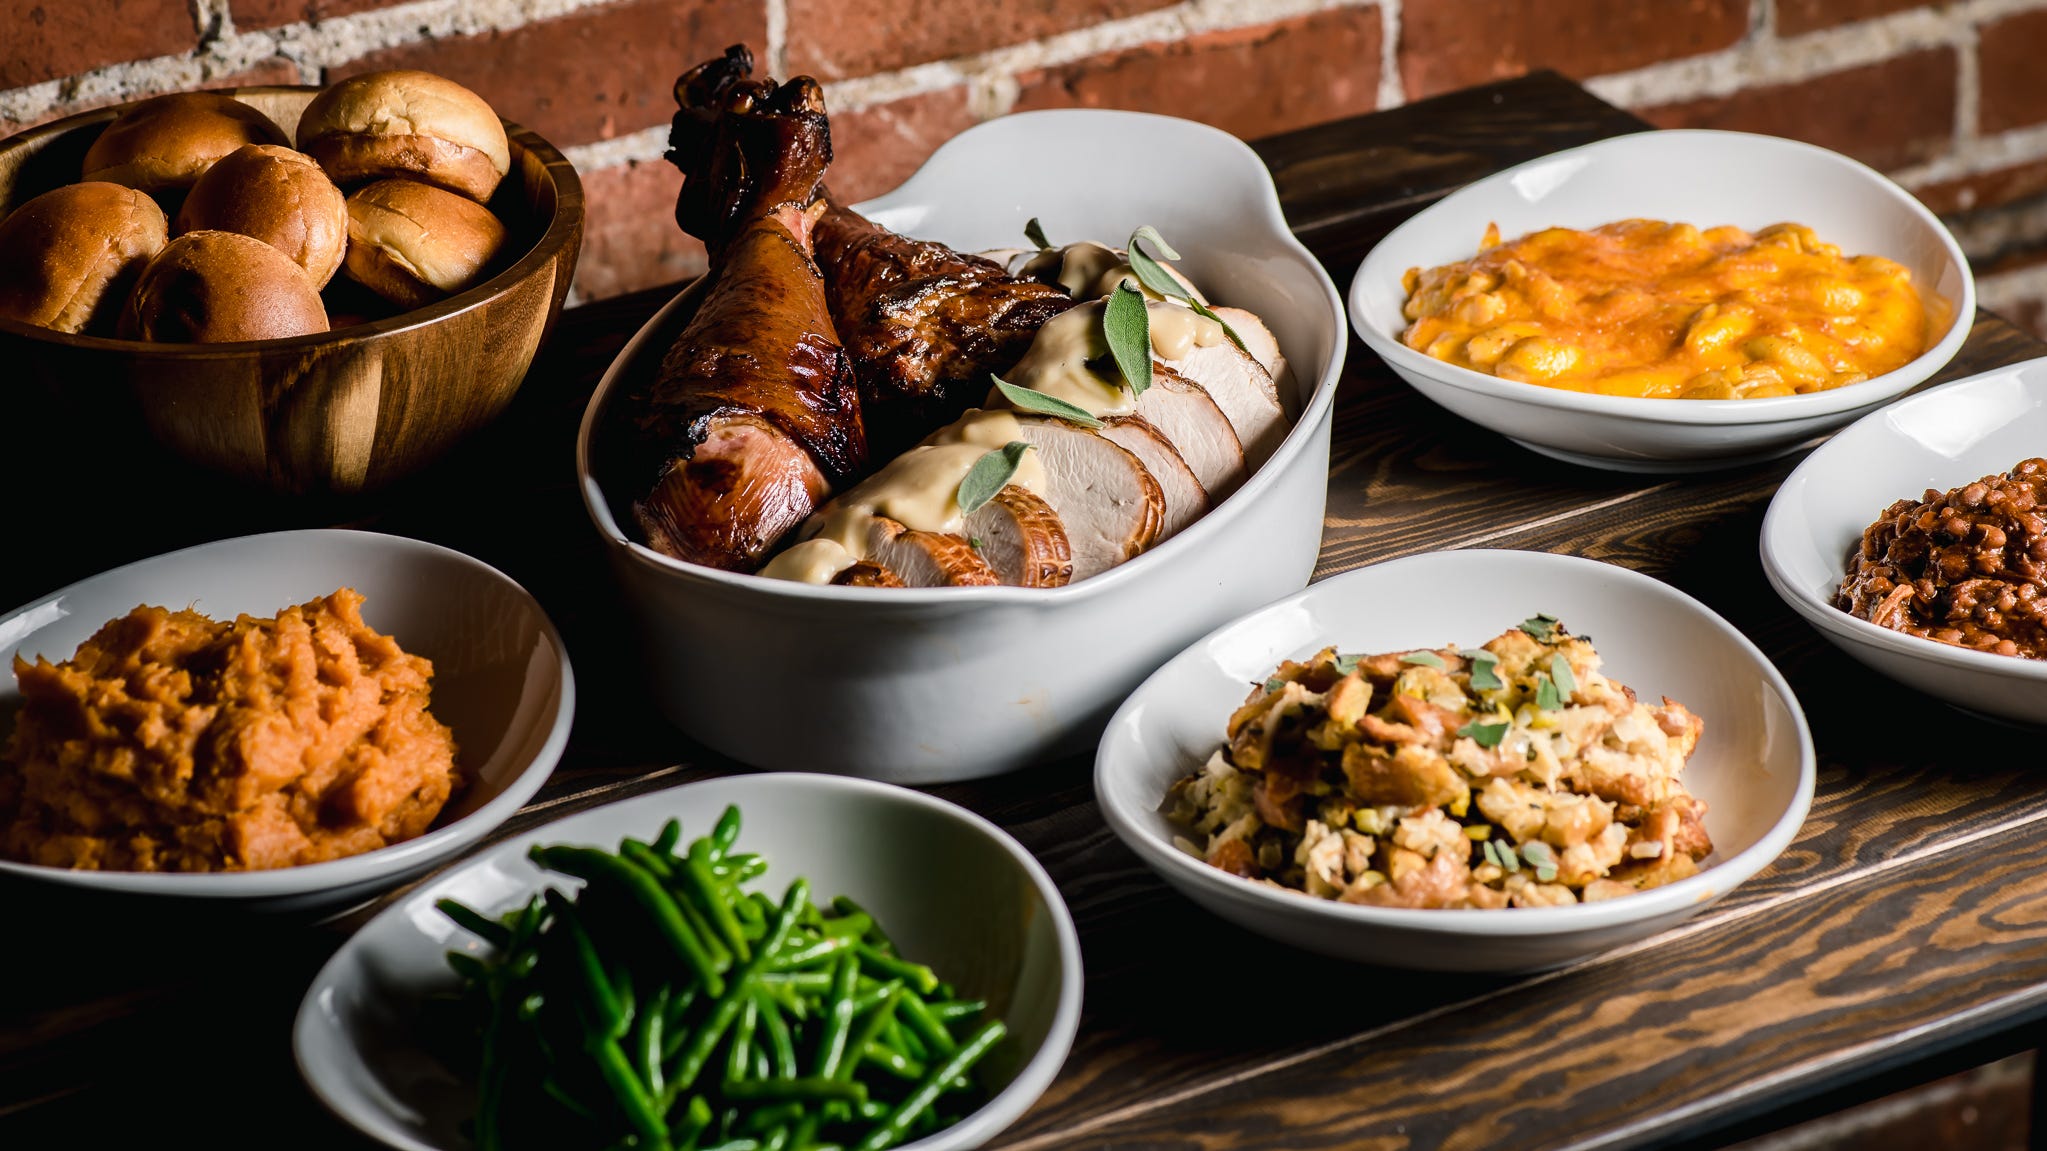 Restaurants offering Thanksgiving meals, service in Metro Detroit